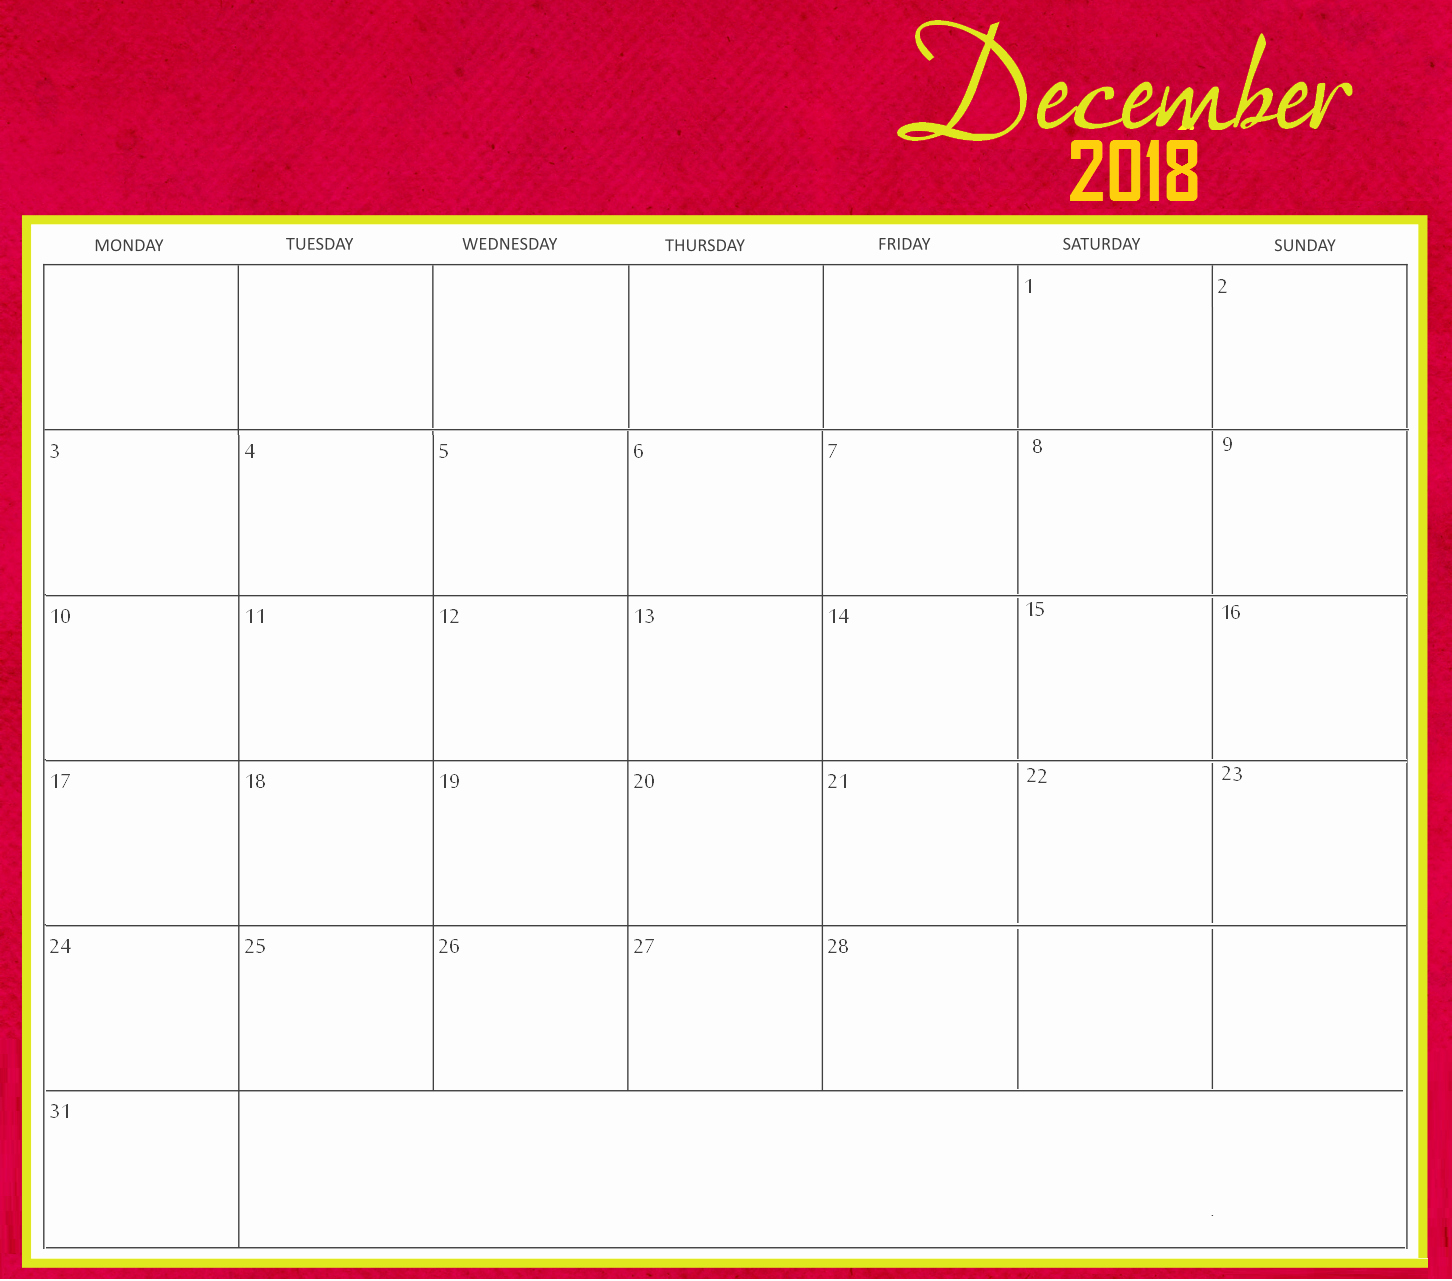 Blank Calendar Template December 2018 Beautiful December 2018 Blank Template Calendar